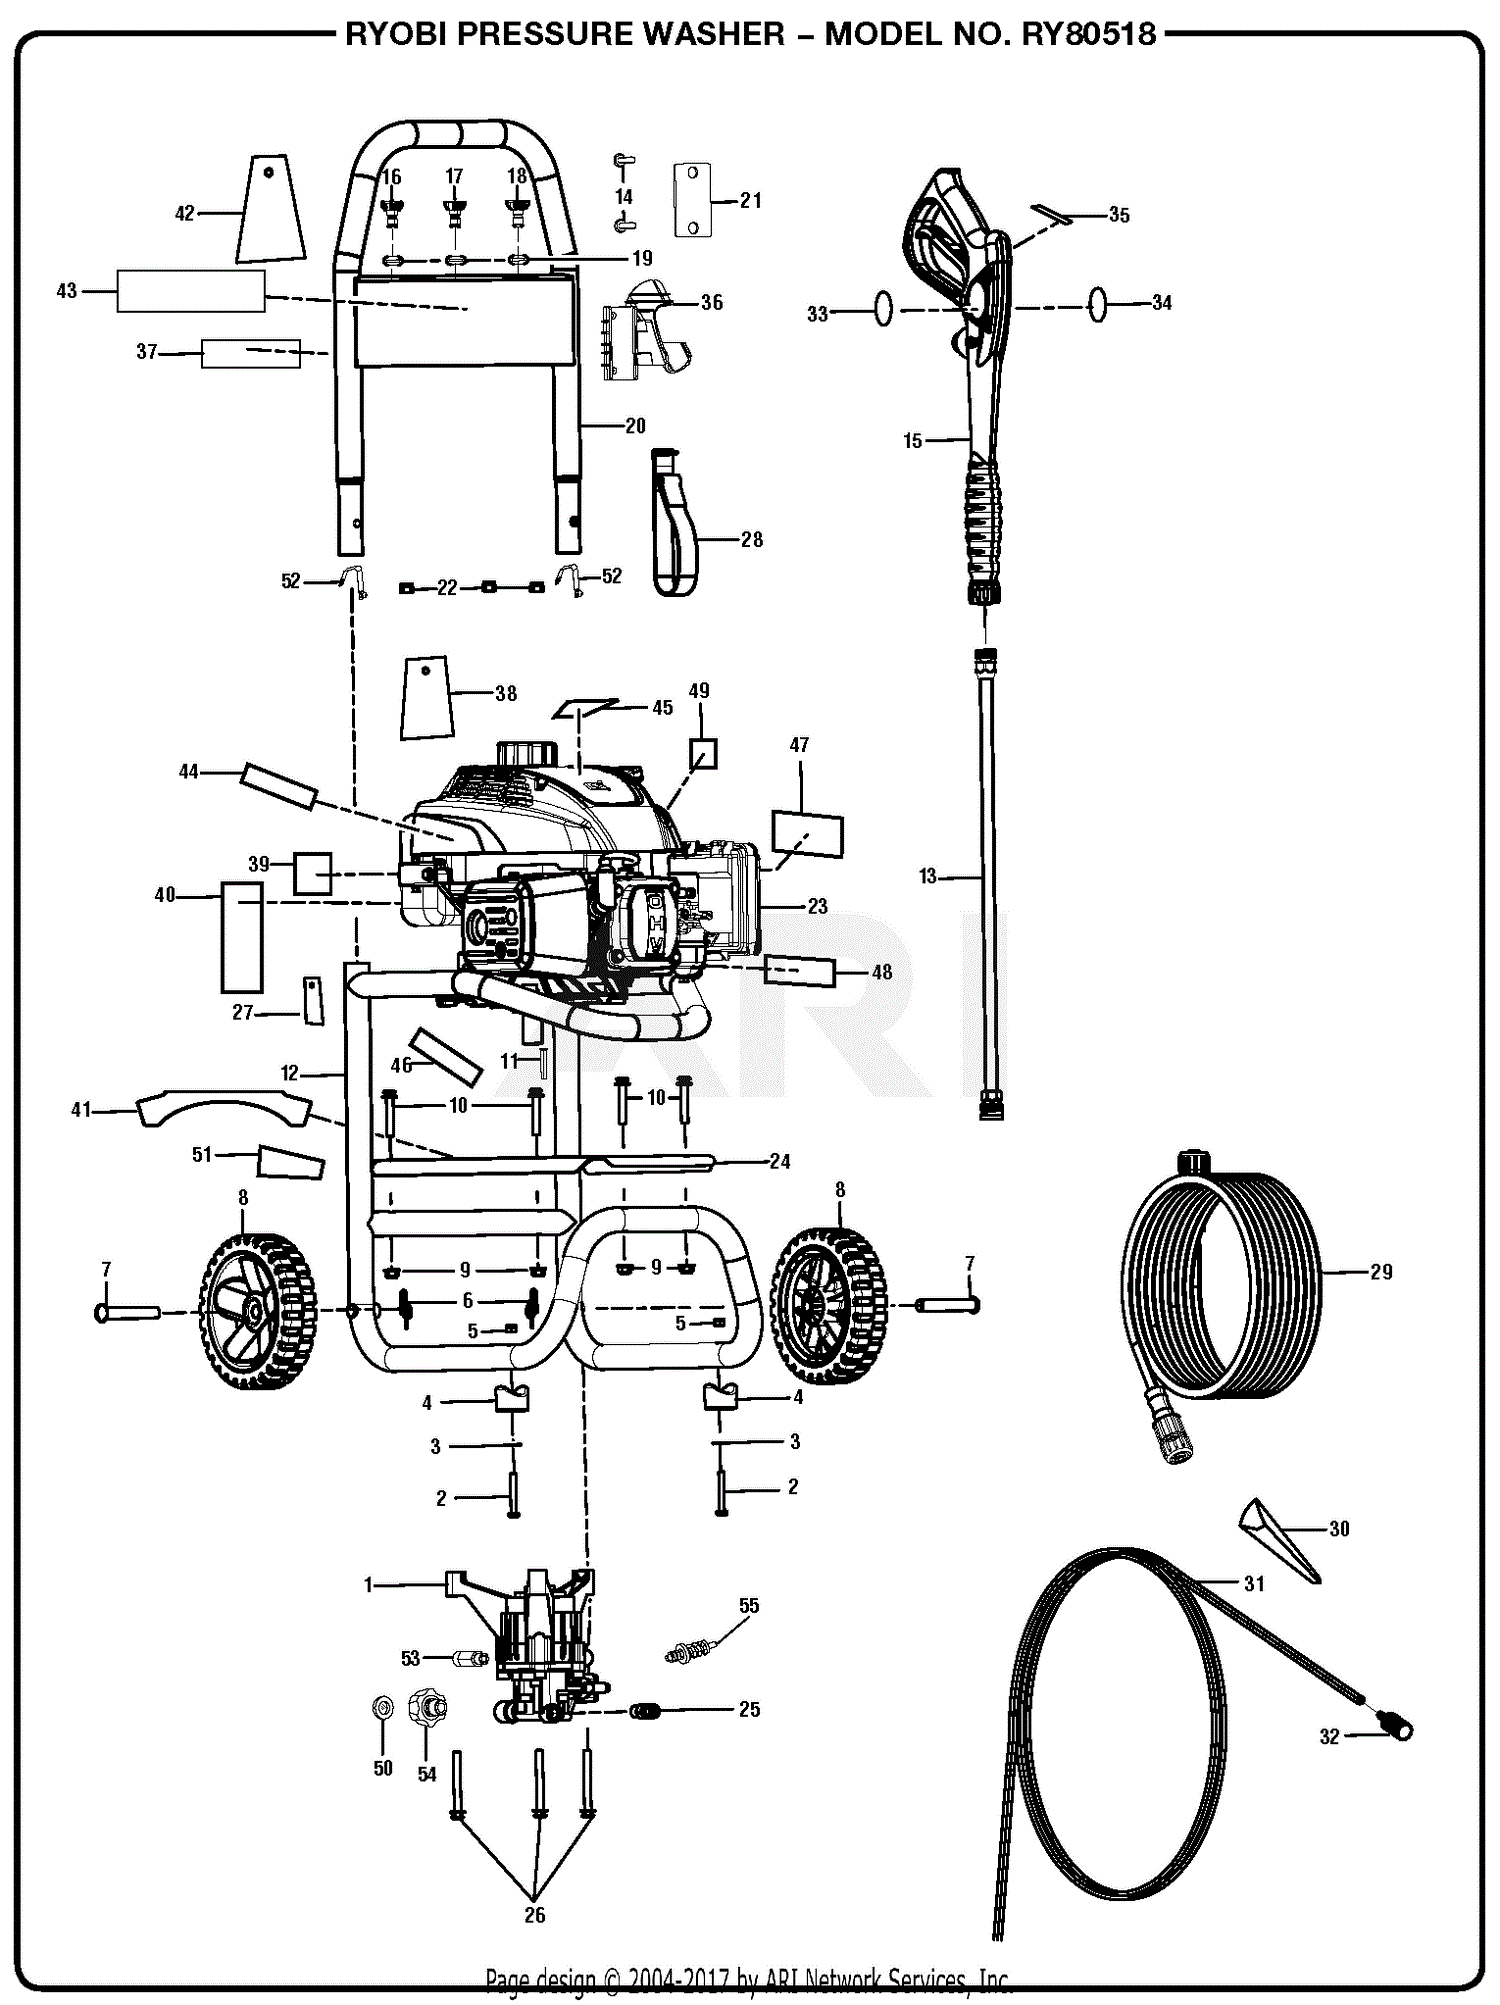 31 Ryobi Pressure Washer Parts Diagram